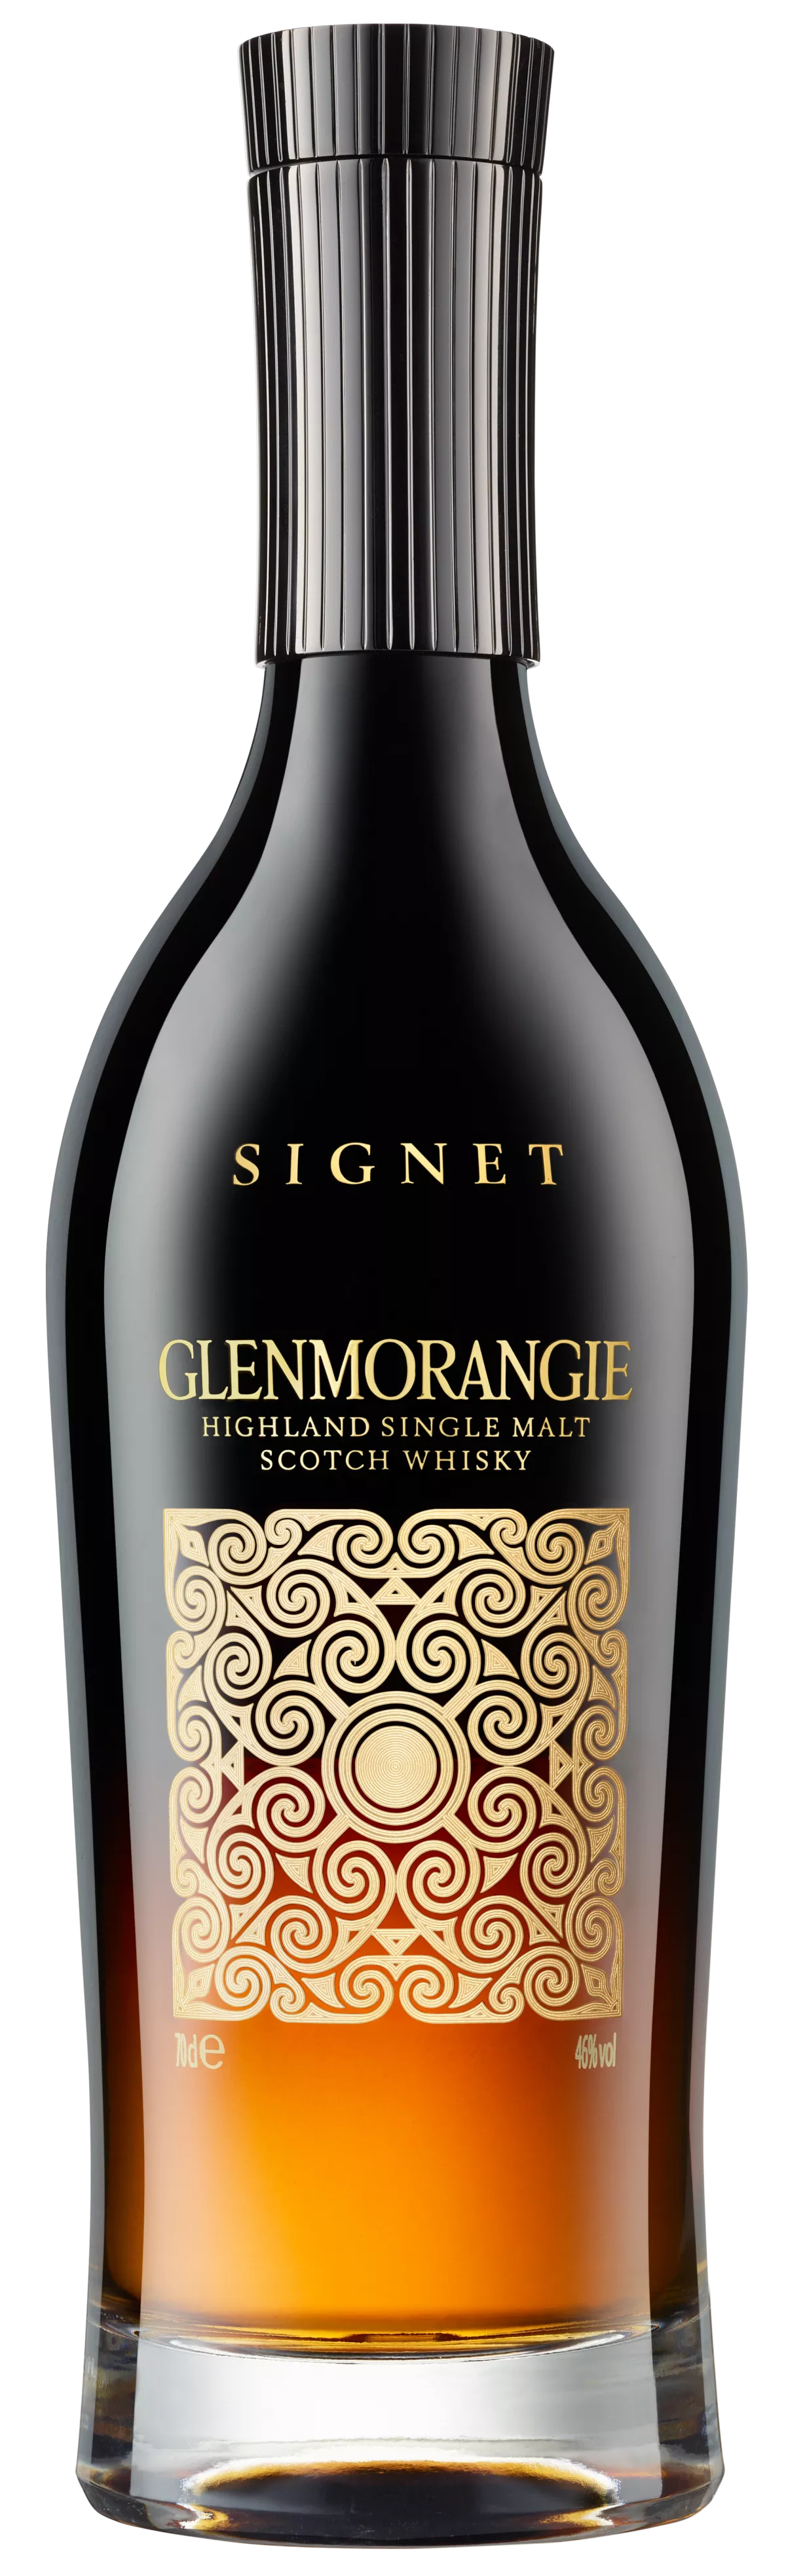 Glenmorangie Signet Single Malt, Product page